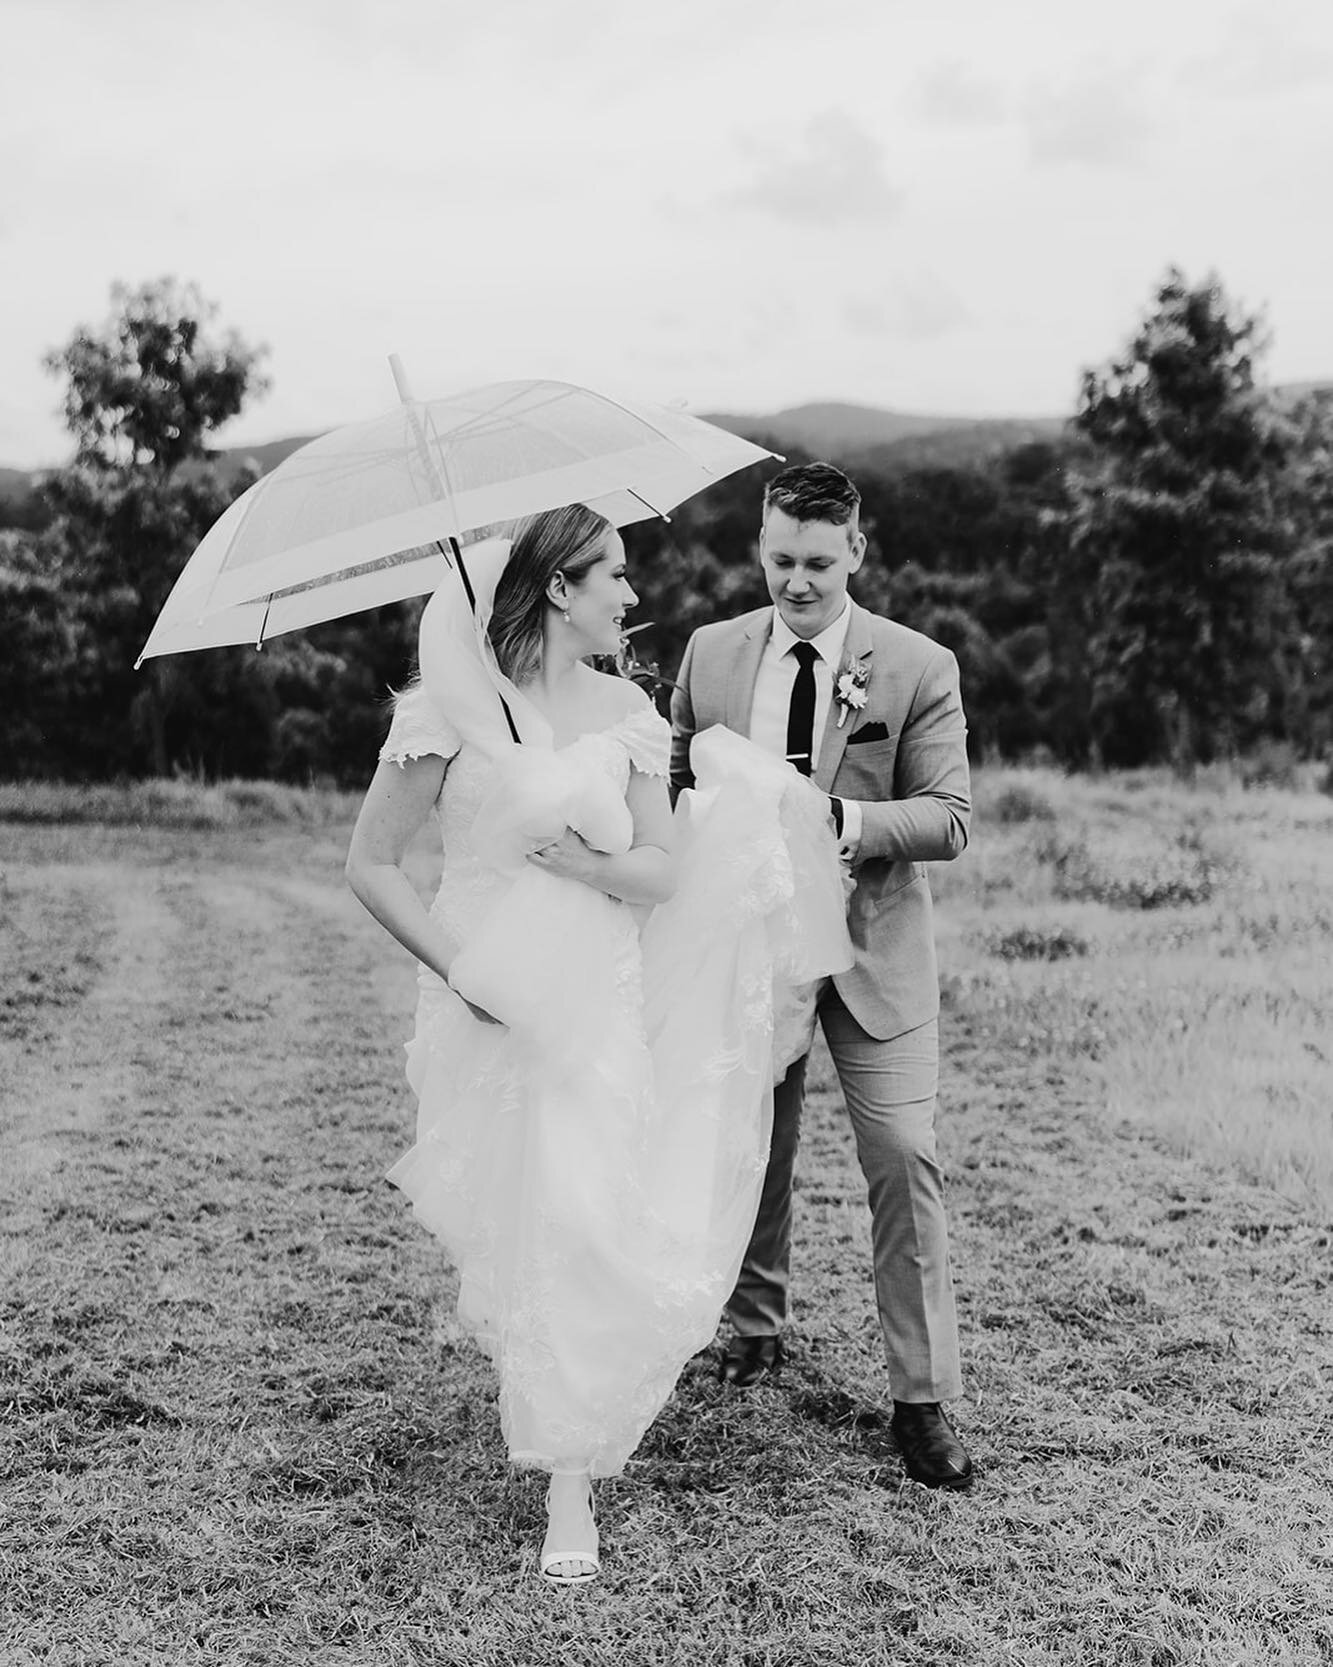 ❤️

Photography @greenandwandering.photography 
.
.
.
#brisbaneweddings #brisbaneweddingphotographer #brisbanevenues #rainyweddingphotos #brisbanewedding #weddingphotography